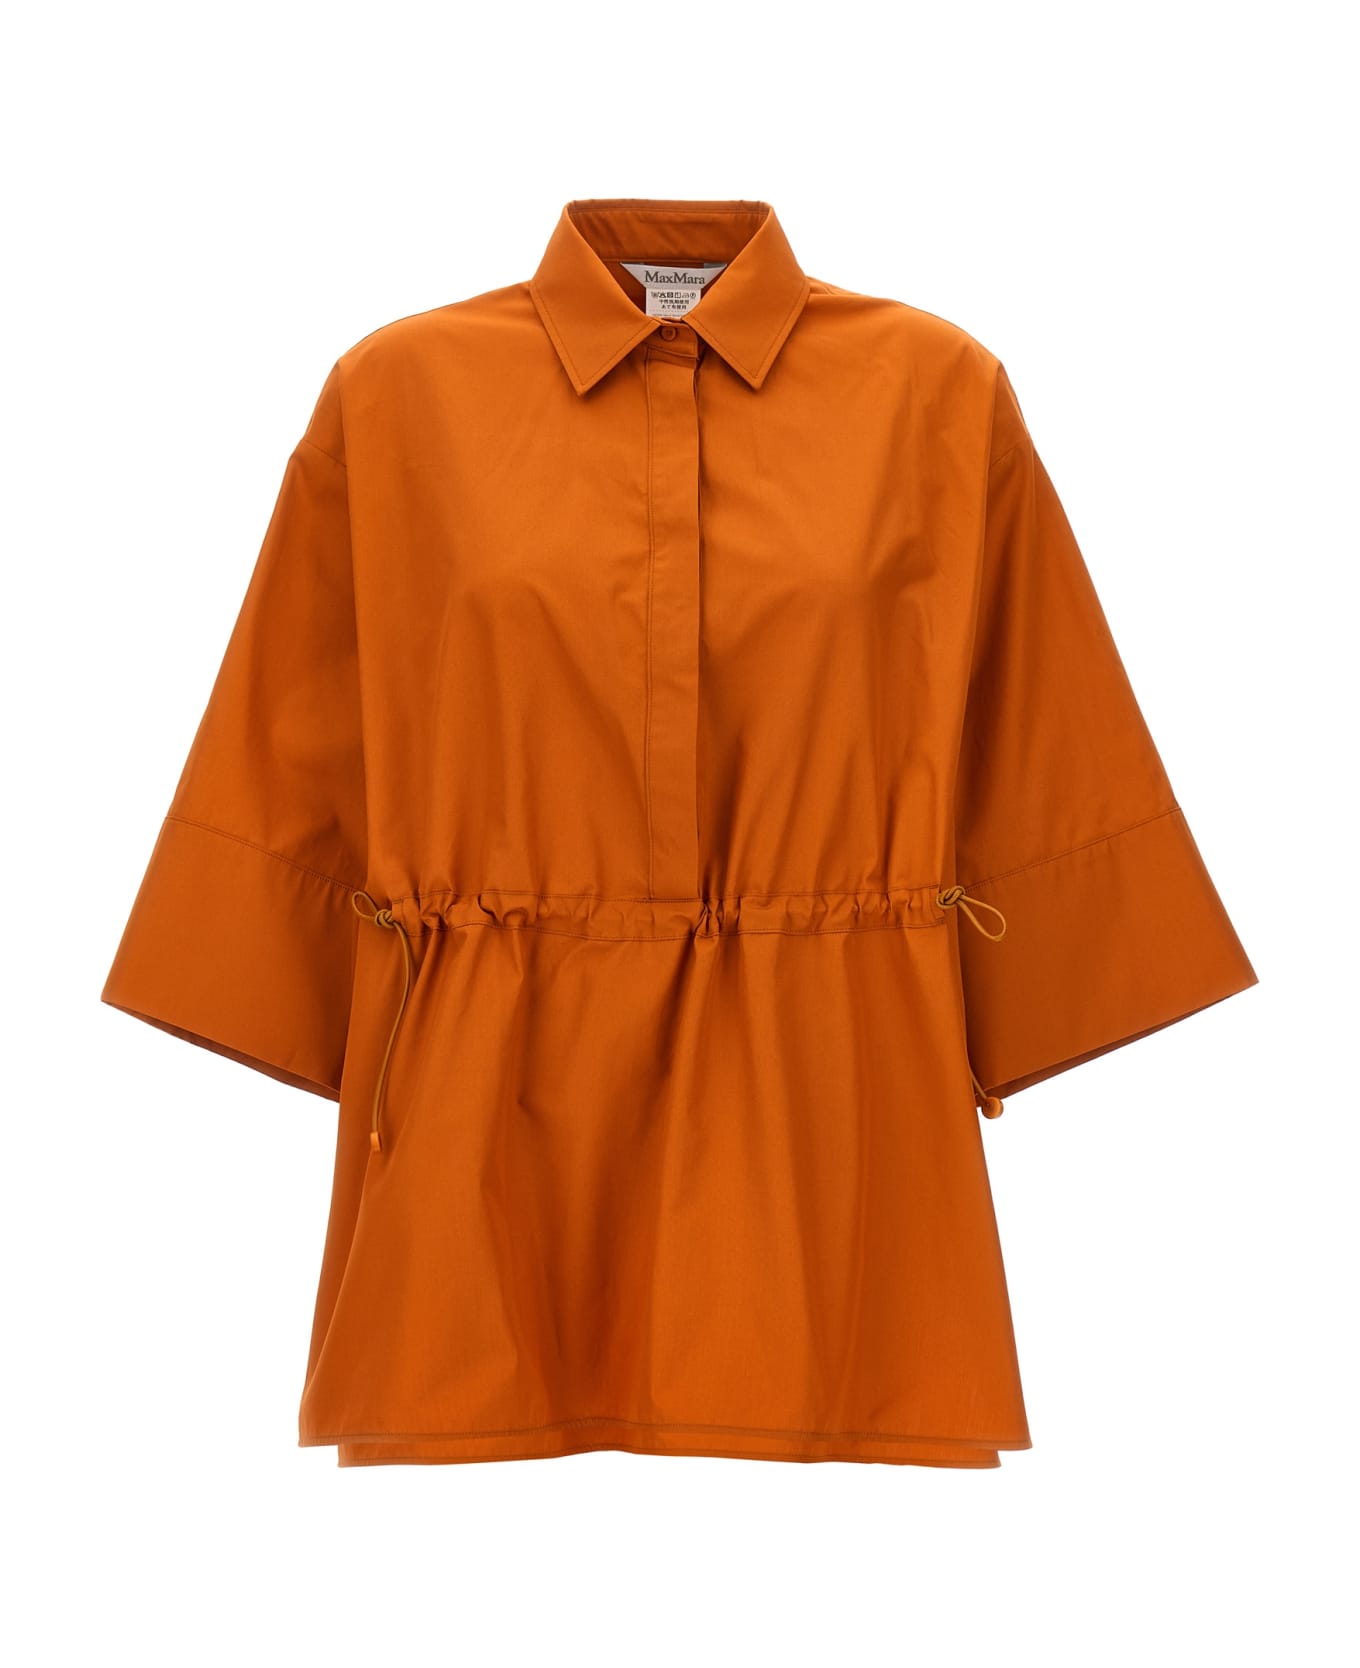 Max Mara 'march' Shirt - Orange